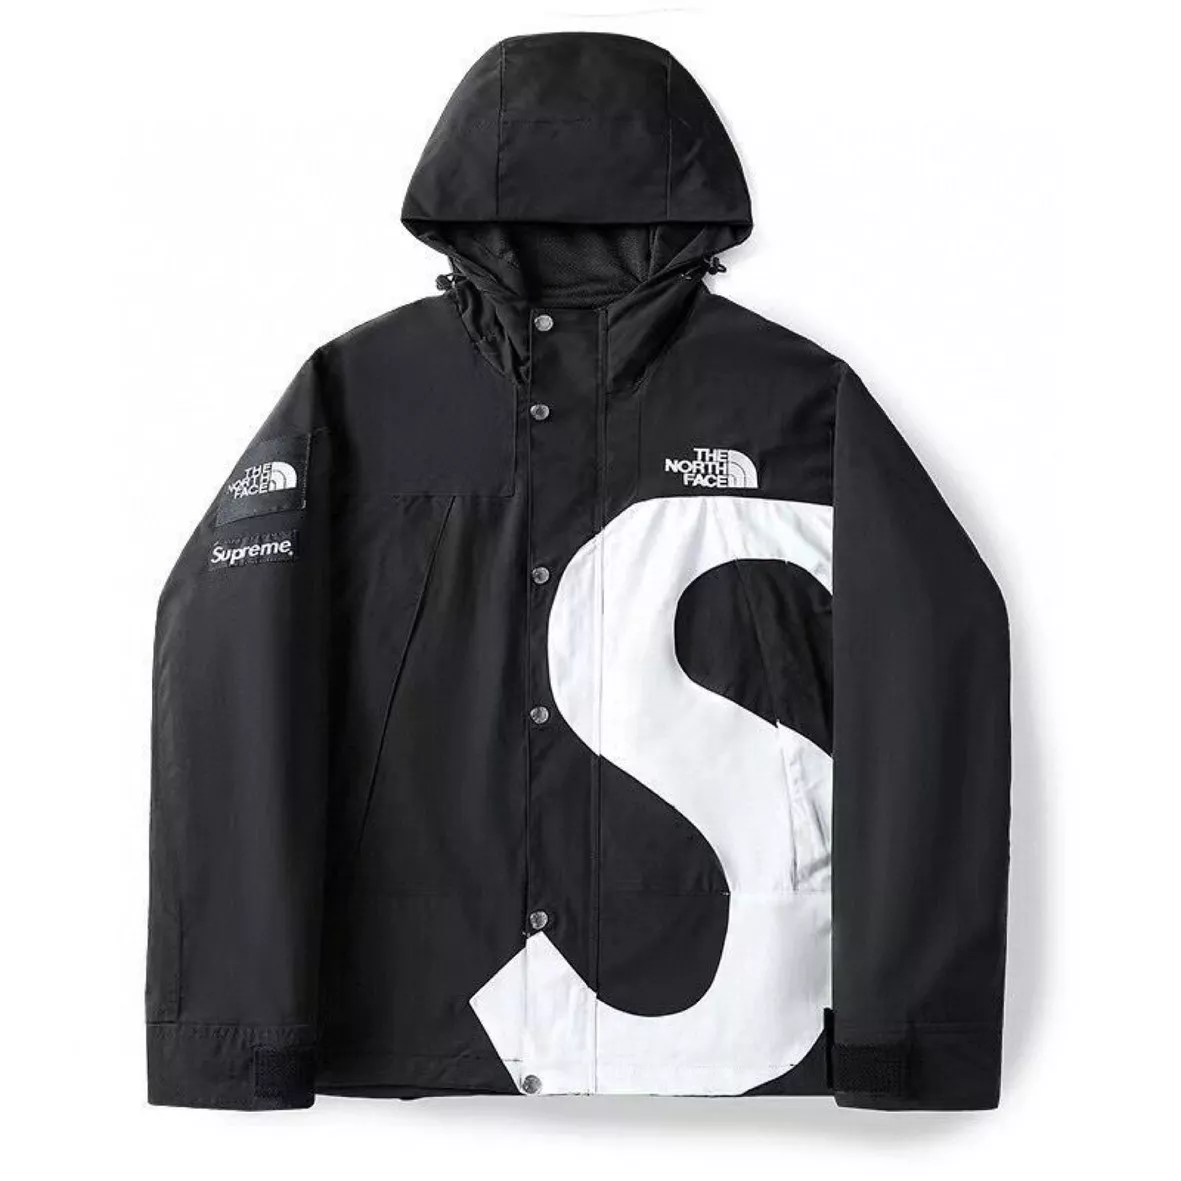 Supreme, Jackets & Coats, Supreme X The North Face Vest